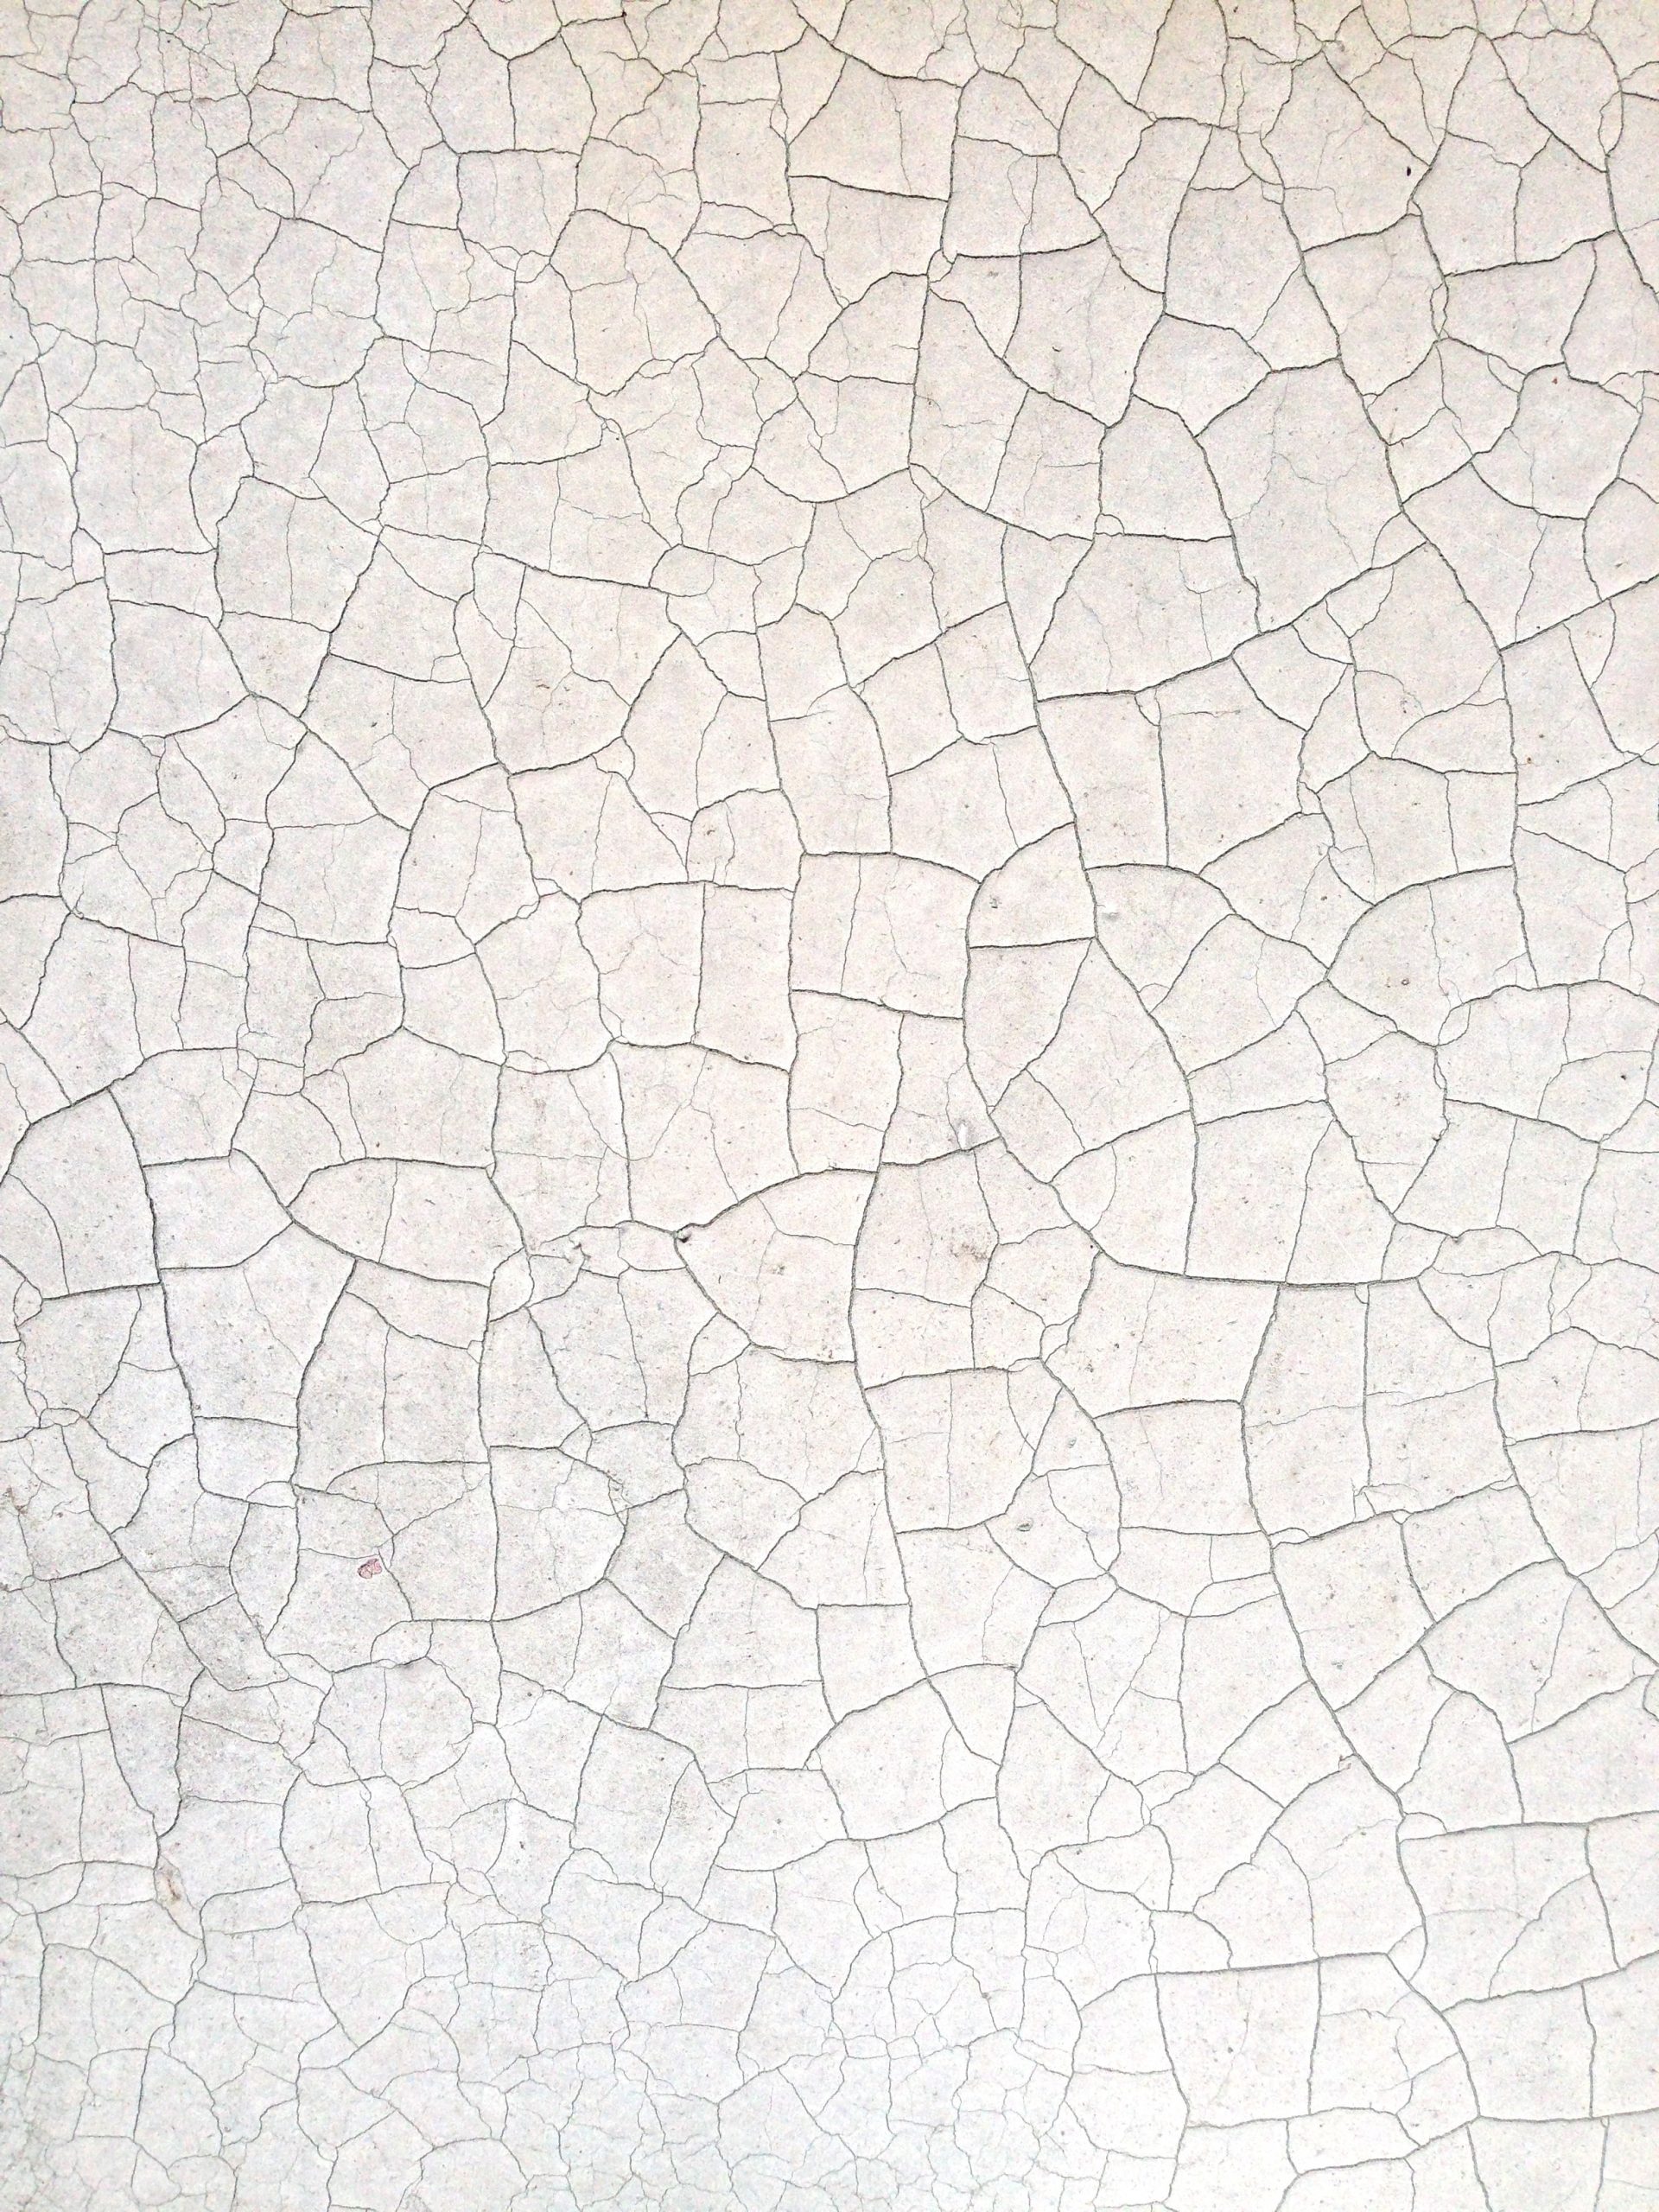 Cracked ground texture wallpaper